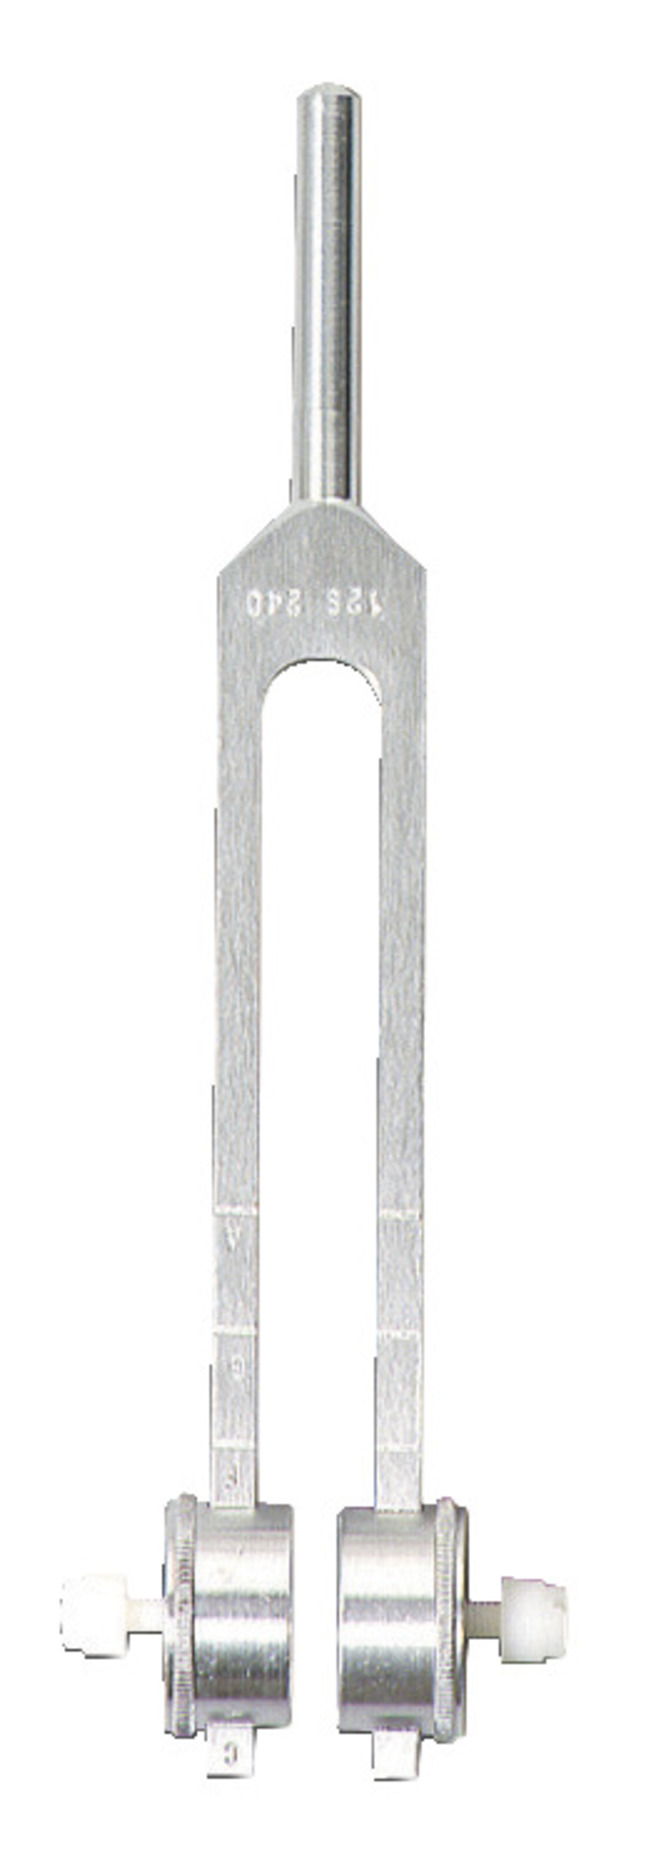 Frey Scientific Adjustable Tuning Fork, Item Number 574100